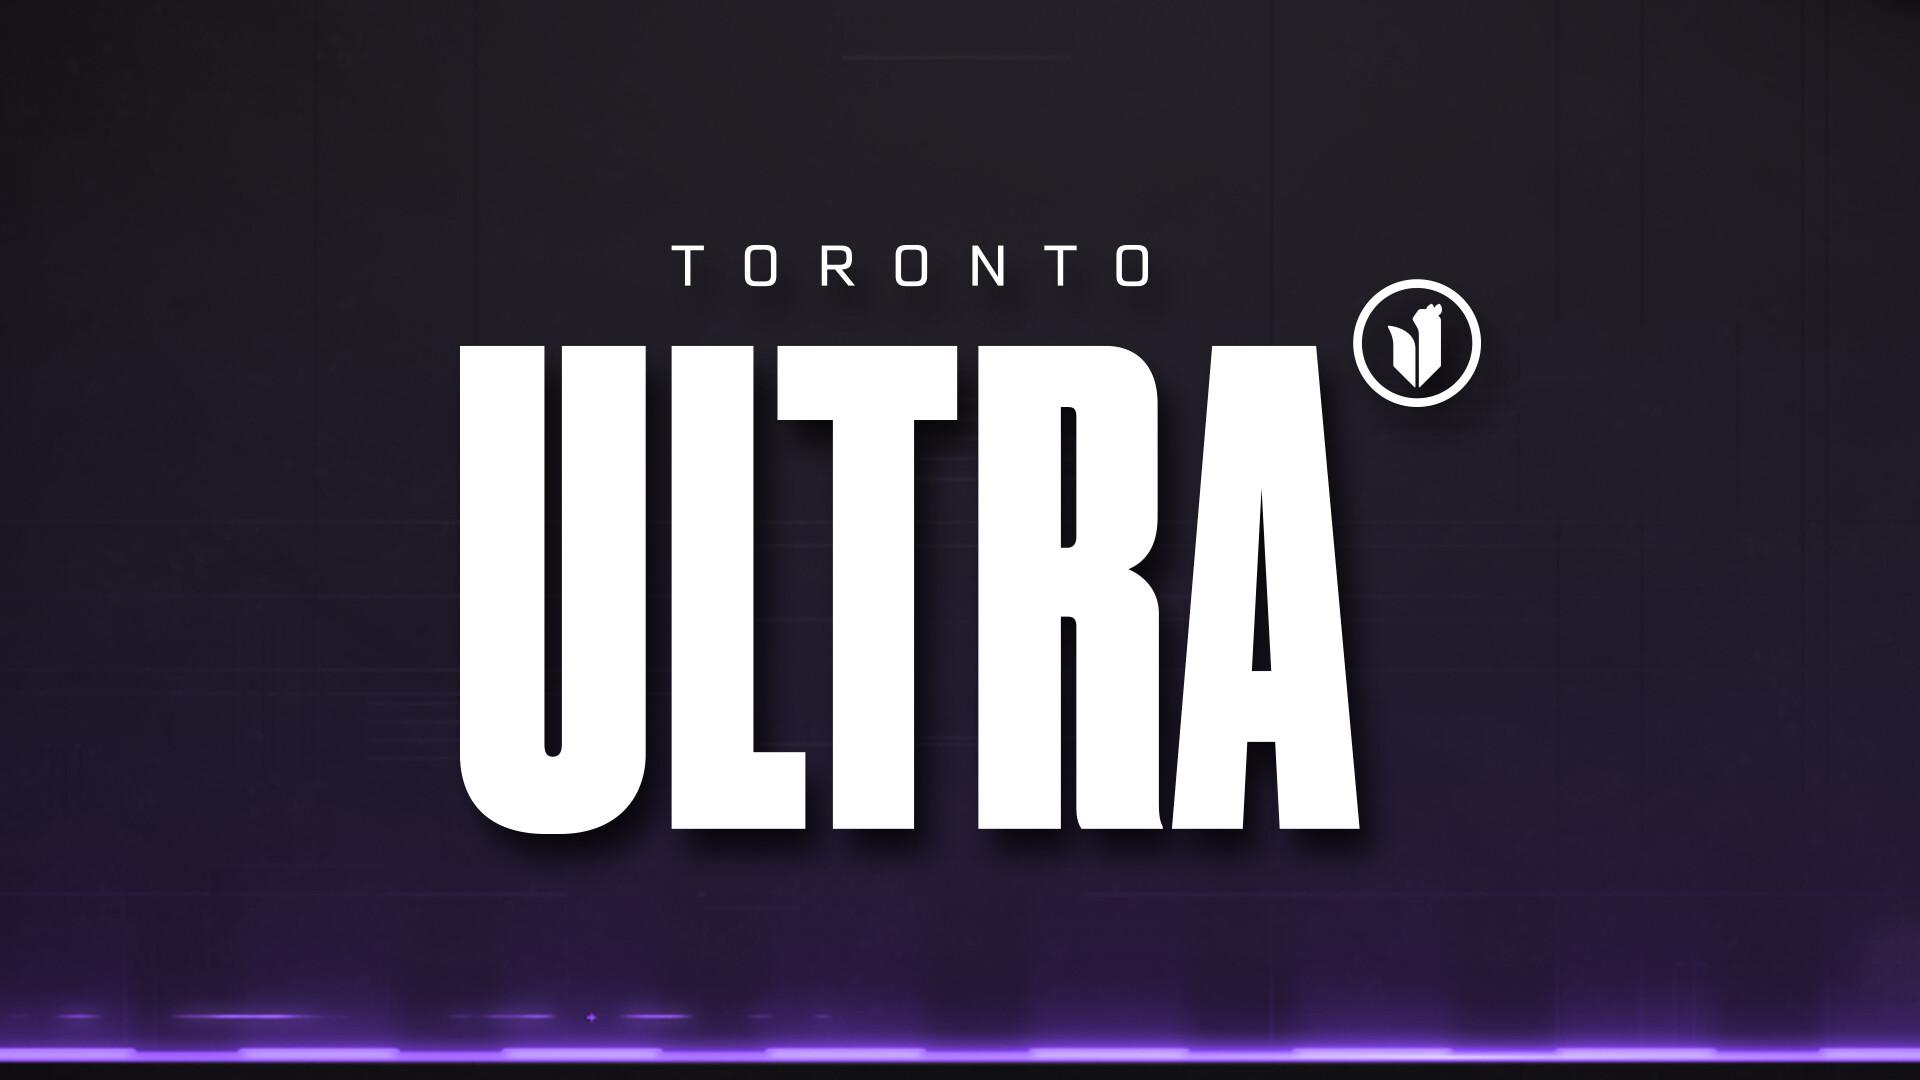 Call of Duty League™ - Toronto Ultra Pack 2023